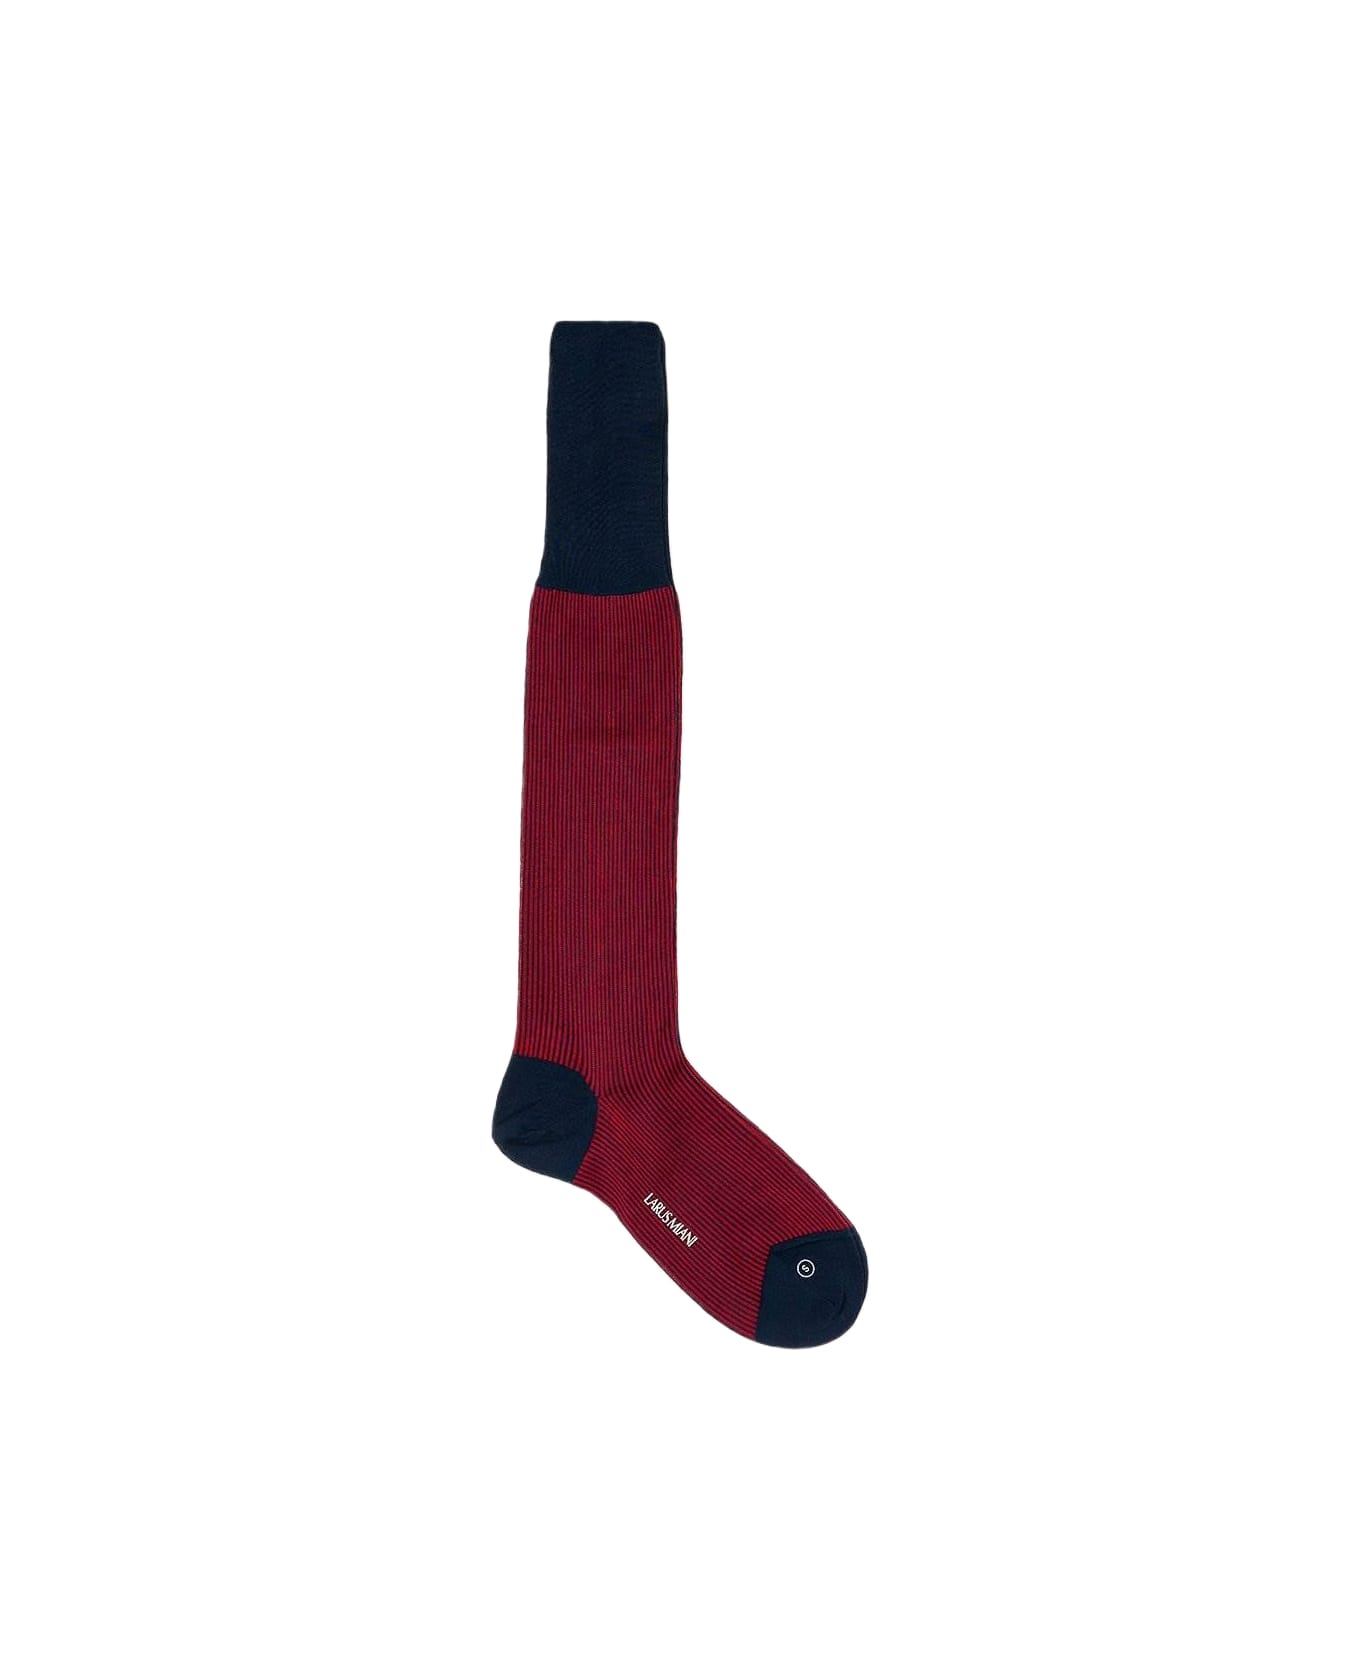 Larusmiani Striped Socks Socks - RIG.PIC.BORD.SCU.